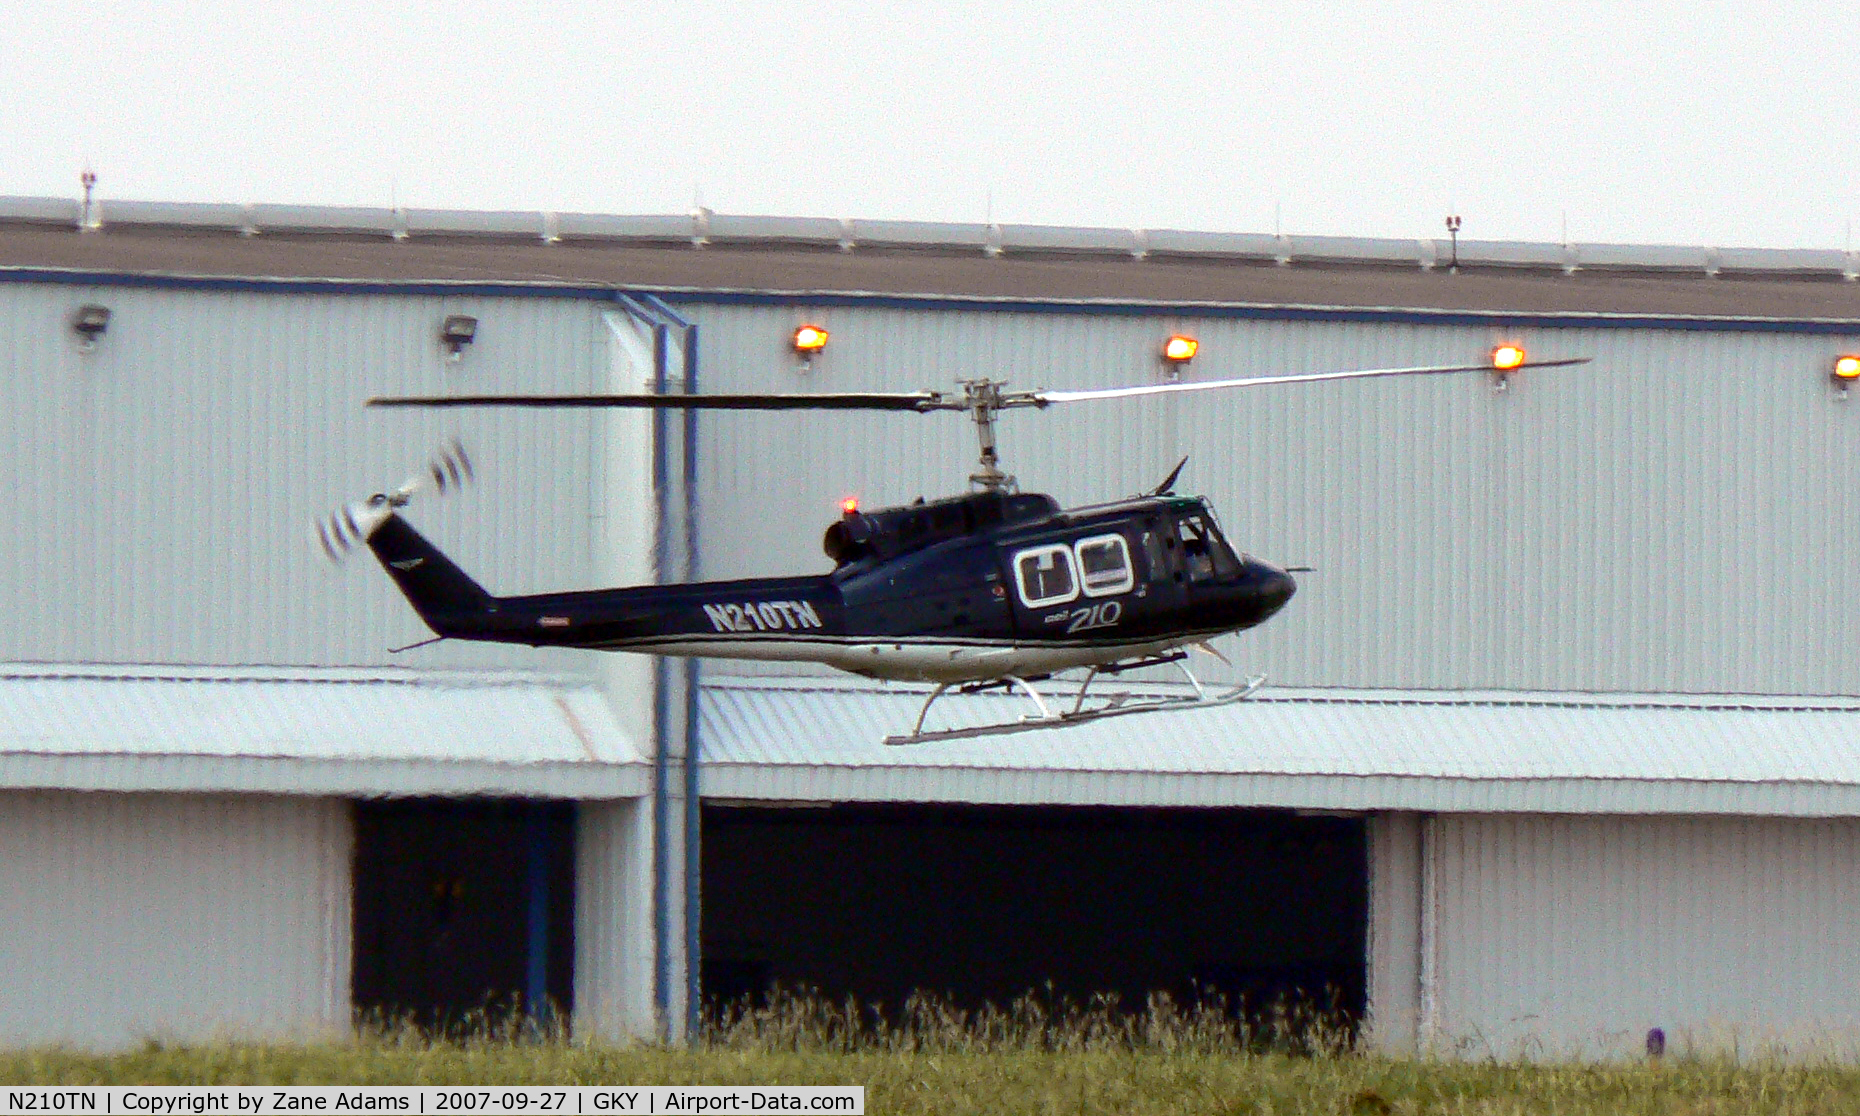 N210TN, 2005 Bell 210 C/N 21001, At Bell plant 6 - XworX - Arlington